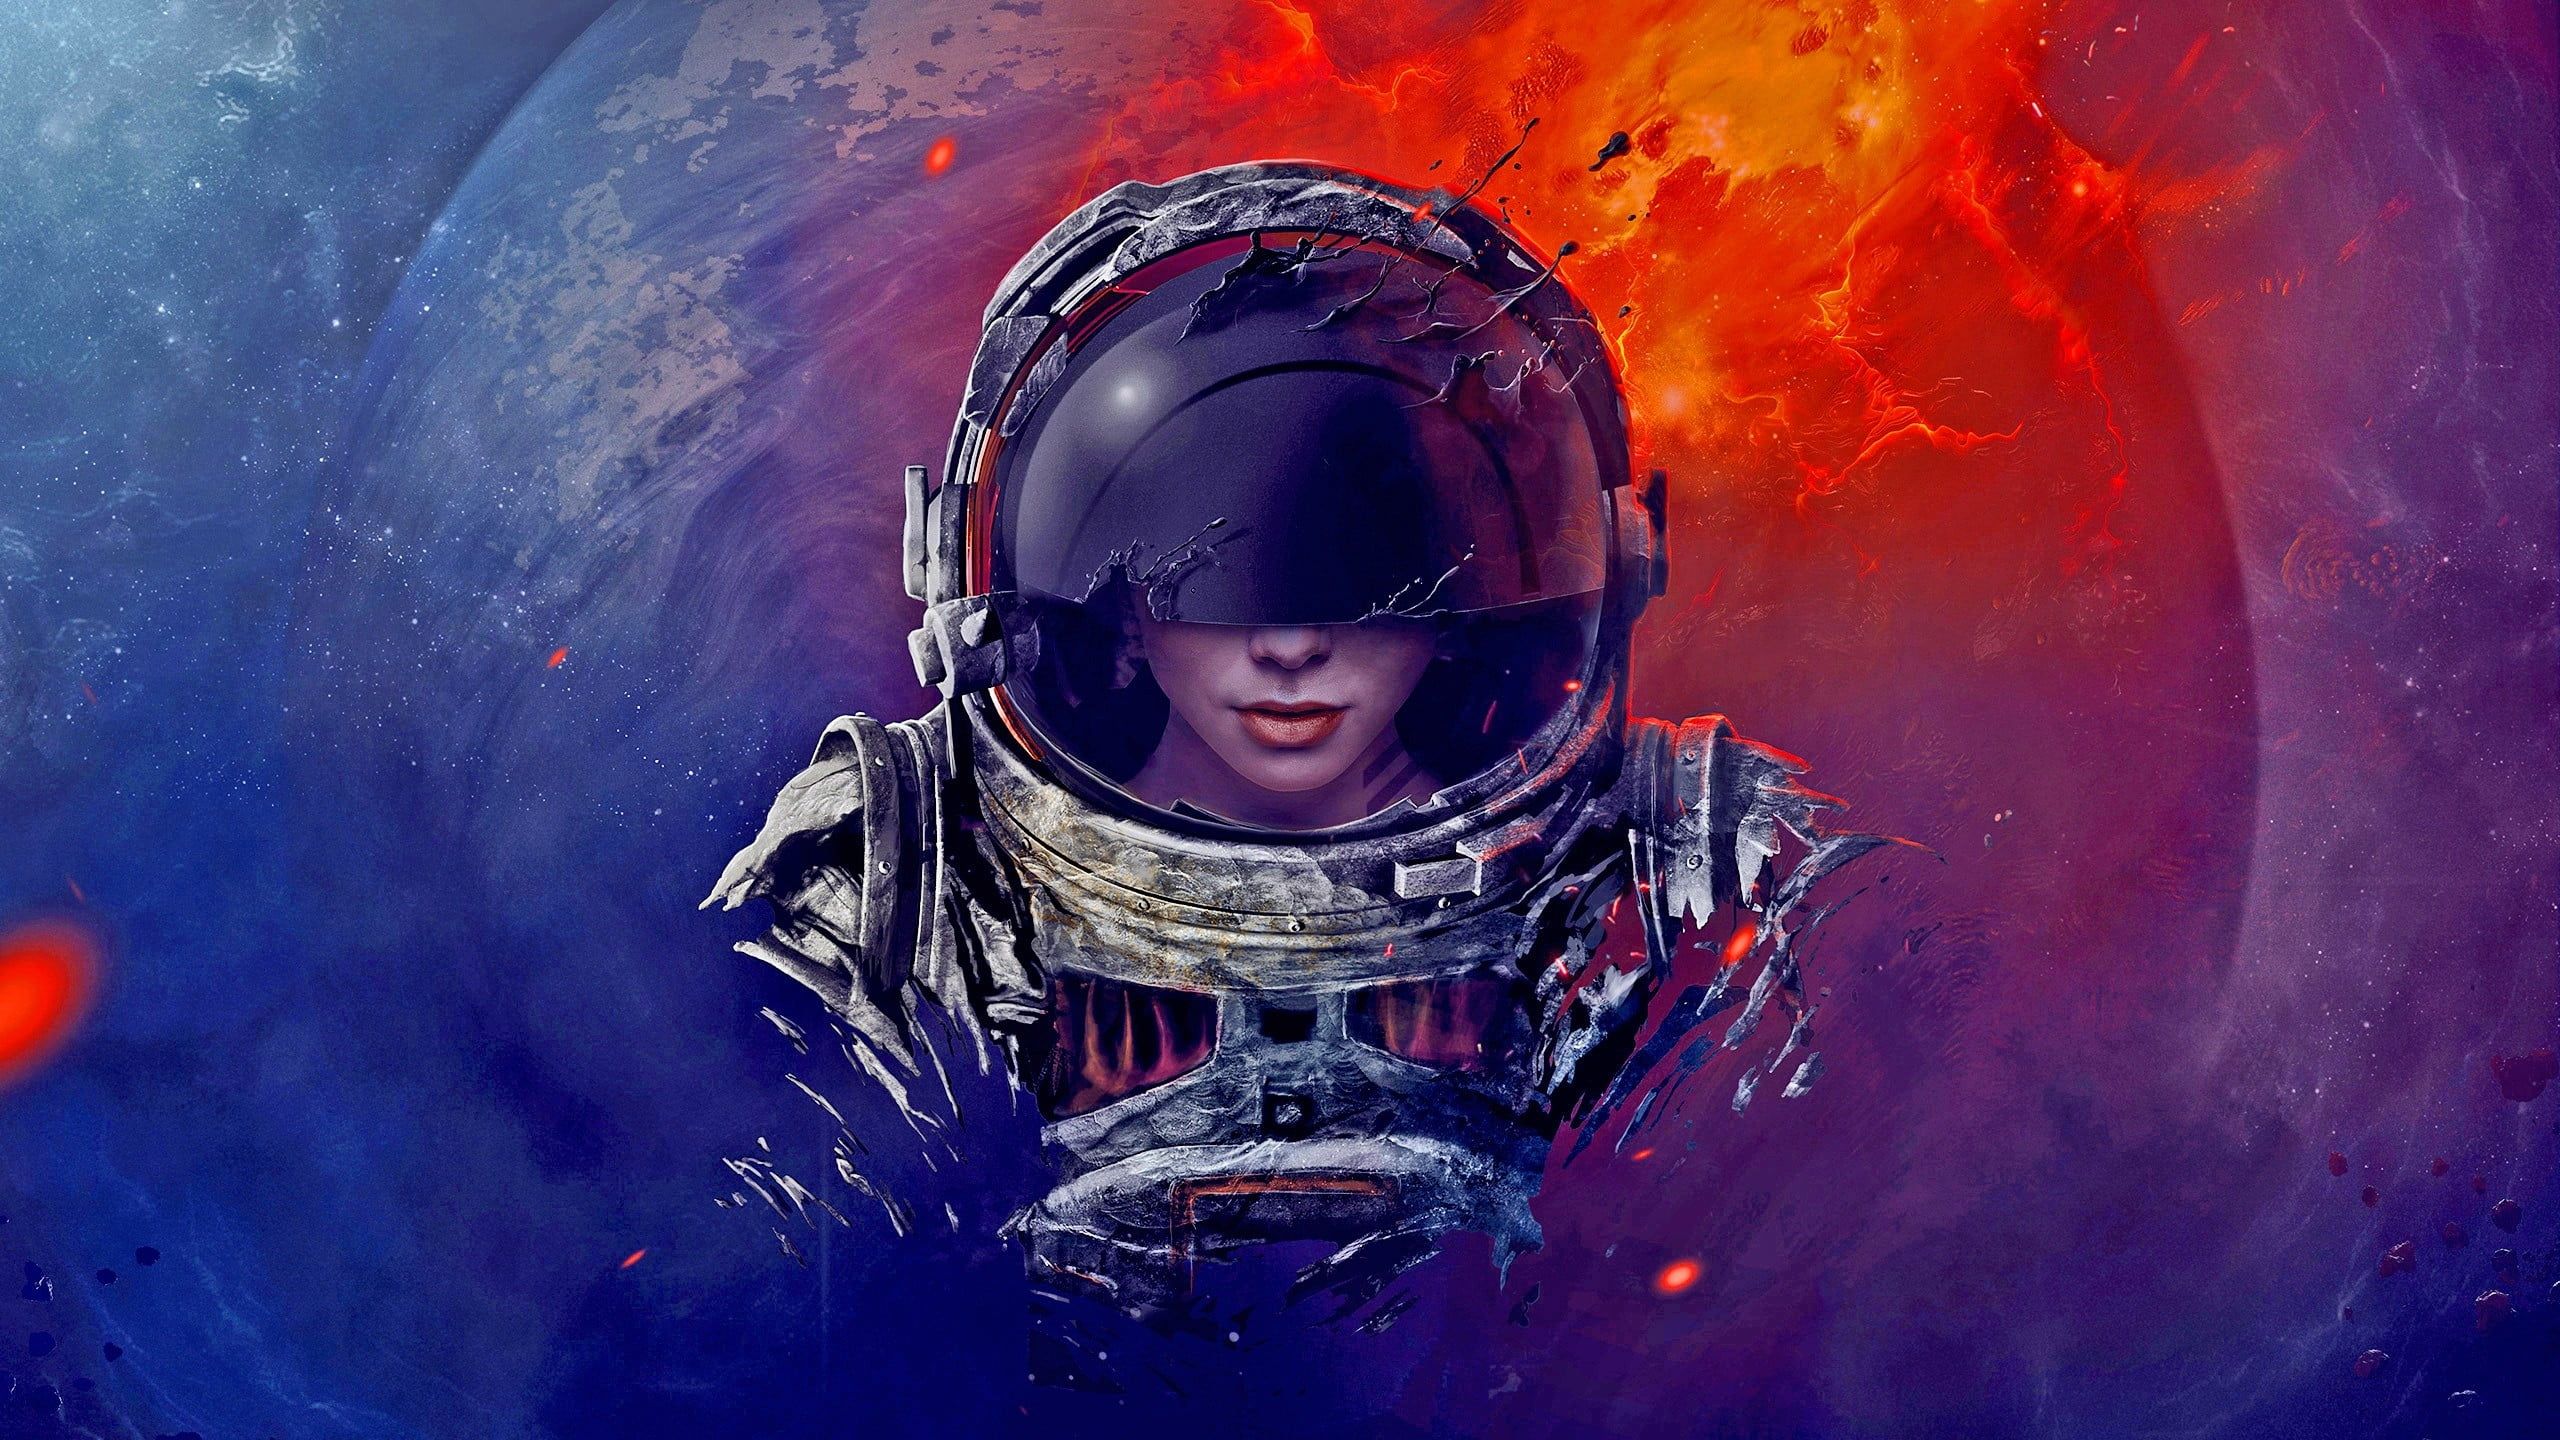 Astronaut wallpaper, digital art, spacesuit, helmet, universe. Astronaut wallpaper, Wallpaper image hd, HD wallpaper